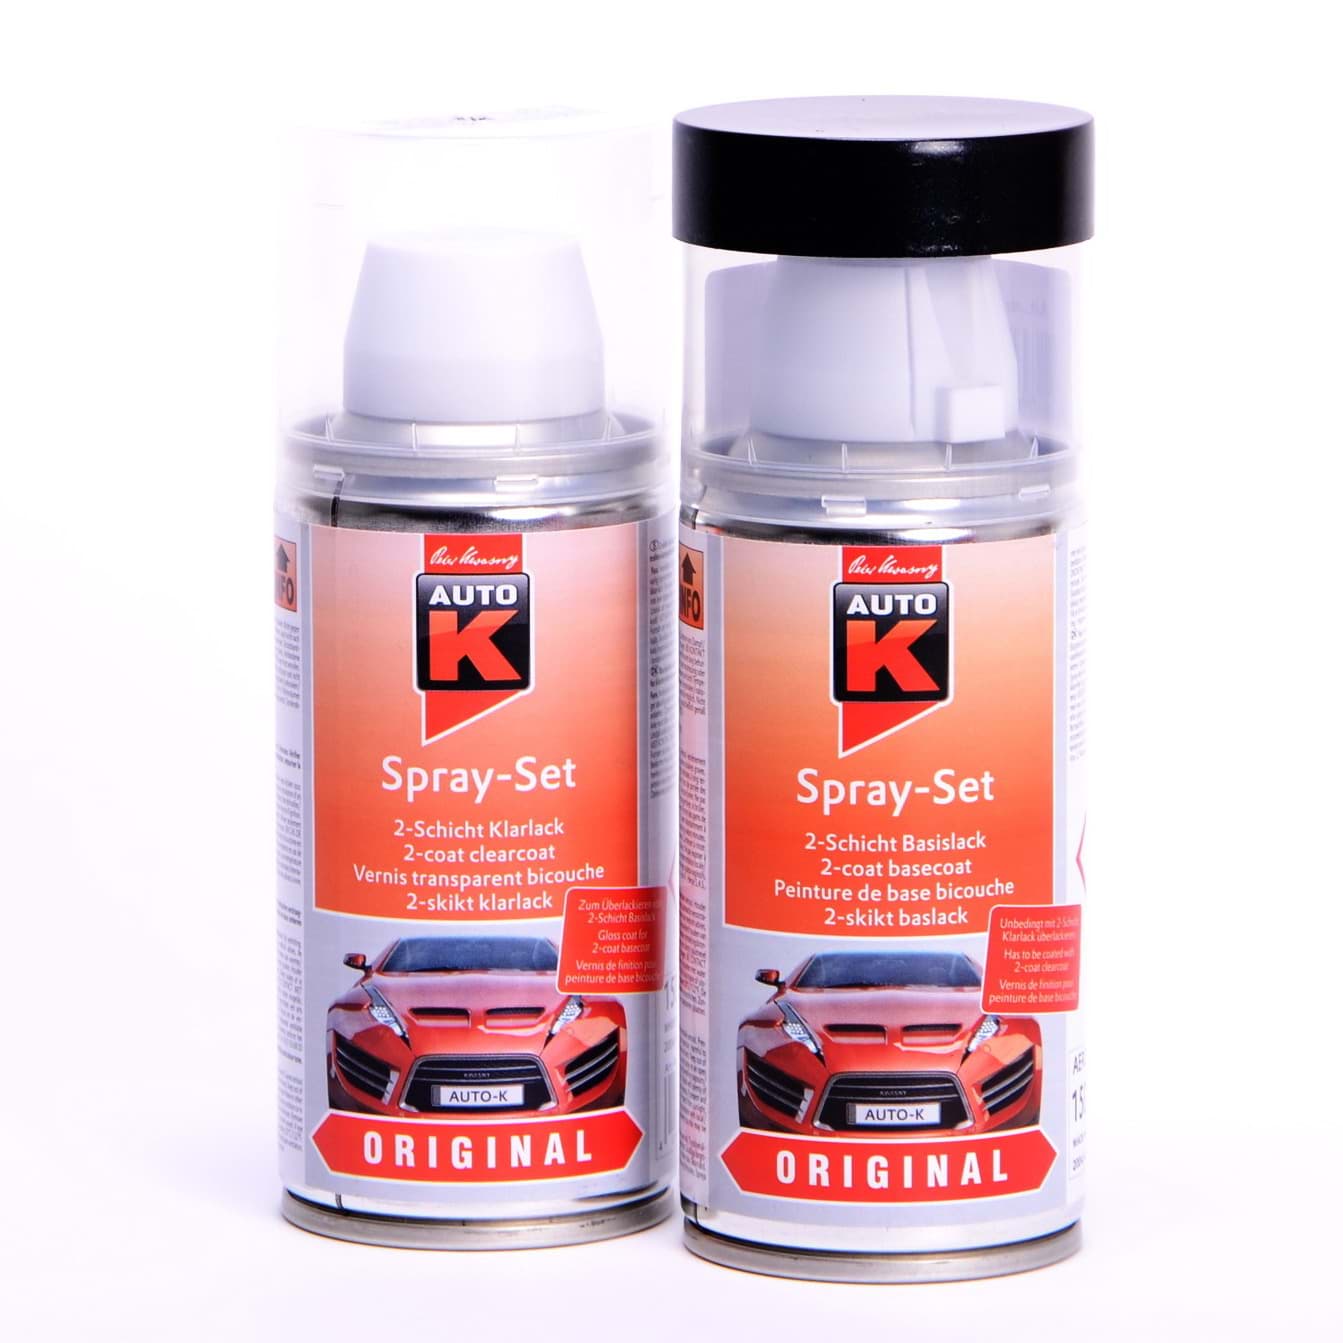 Auto-K Spray-Set Autolack für Opel 568 Rioja perl met 21378 resmi